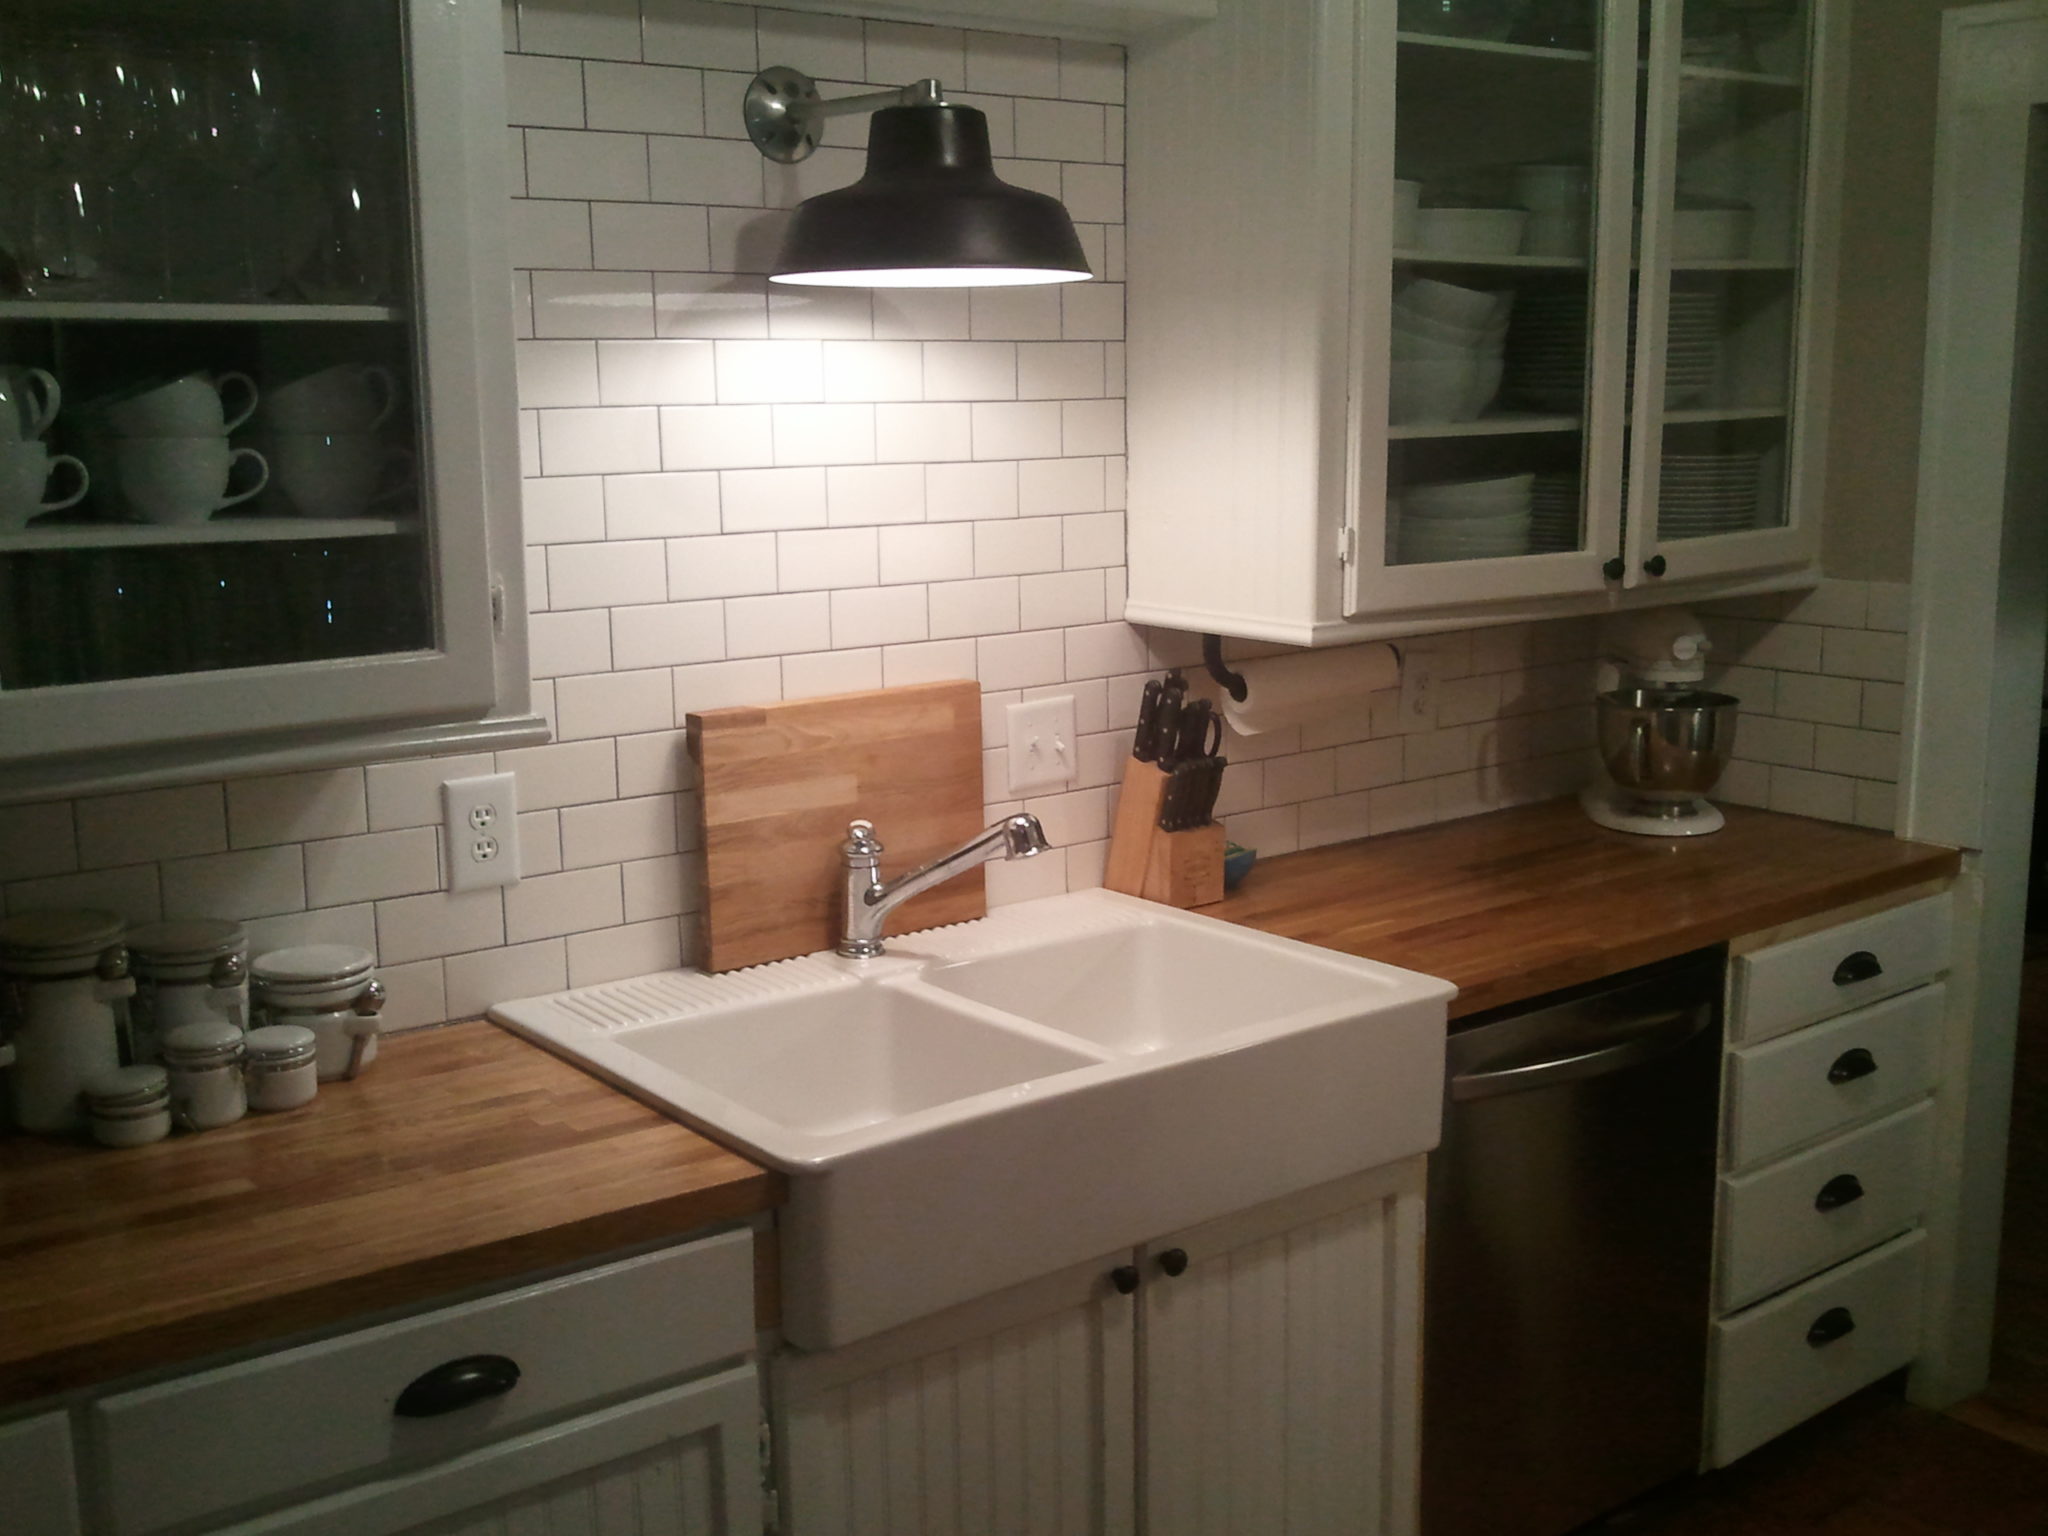 ikea-kitchen-sink-cabinets idea uk